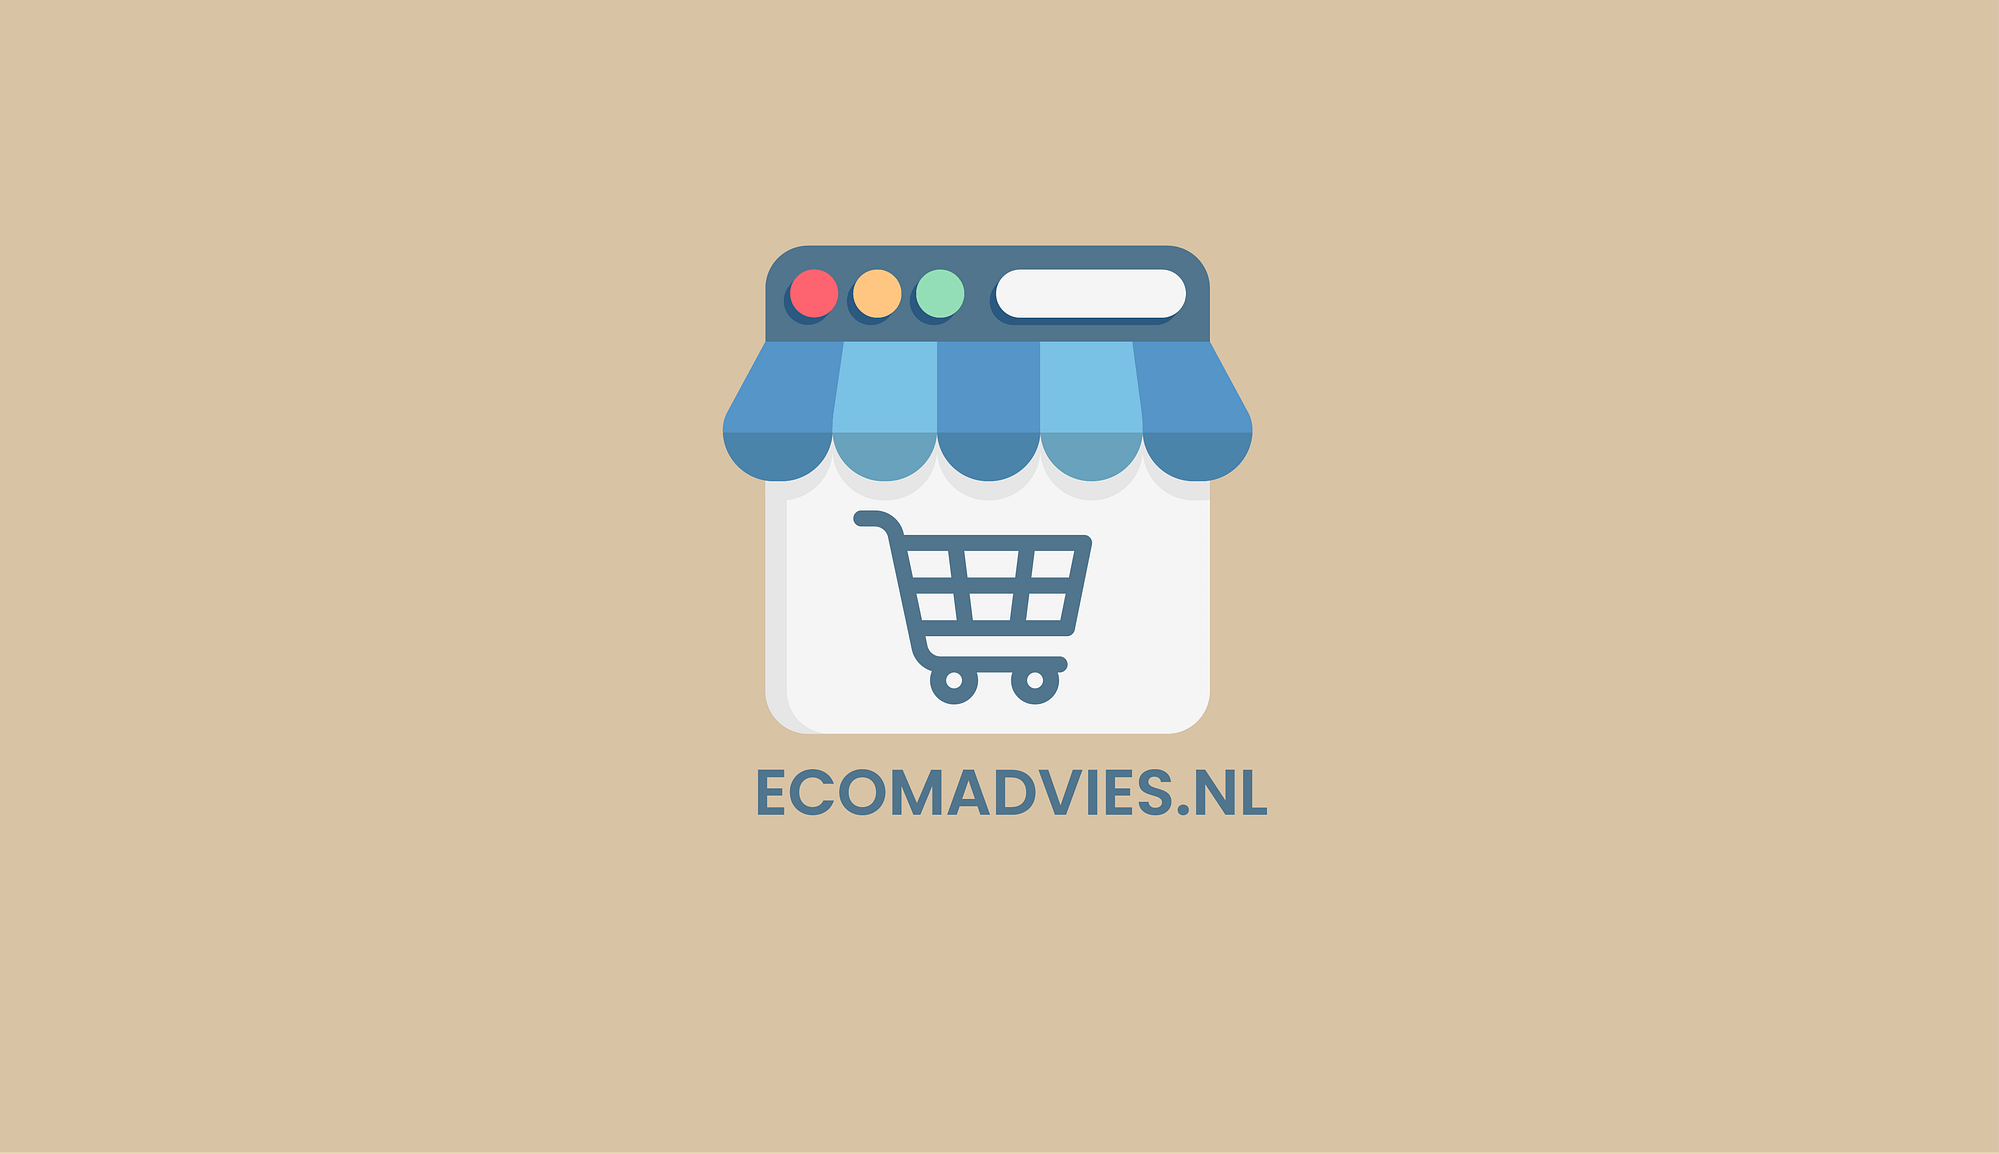 Ecomadvies.nl